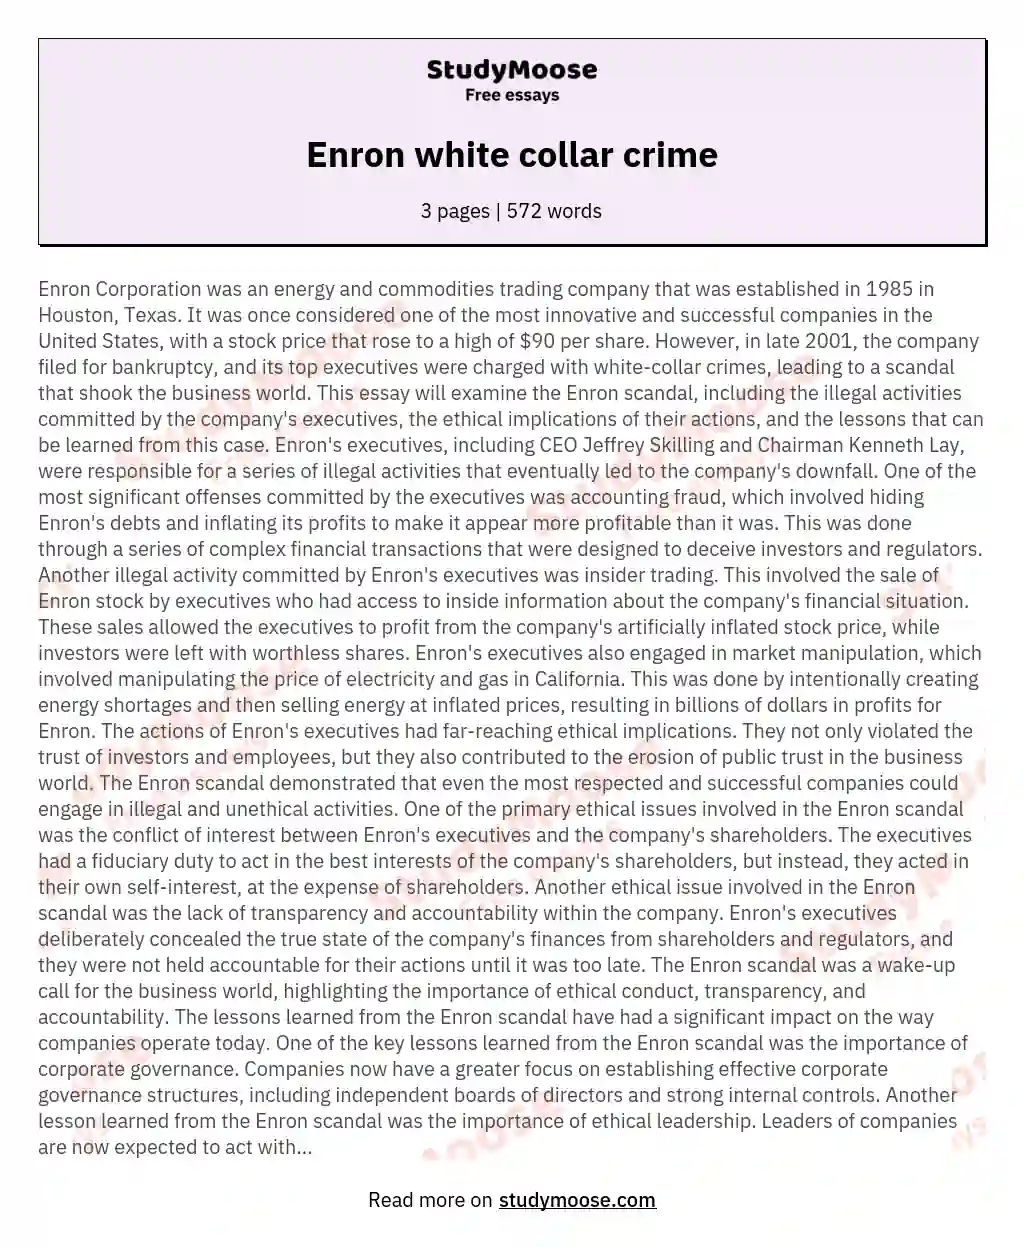 Enron white collar crime essay